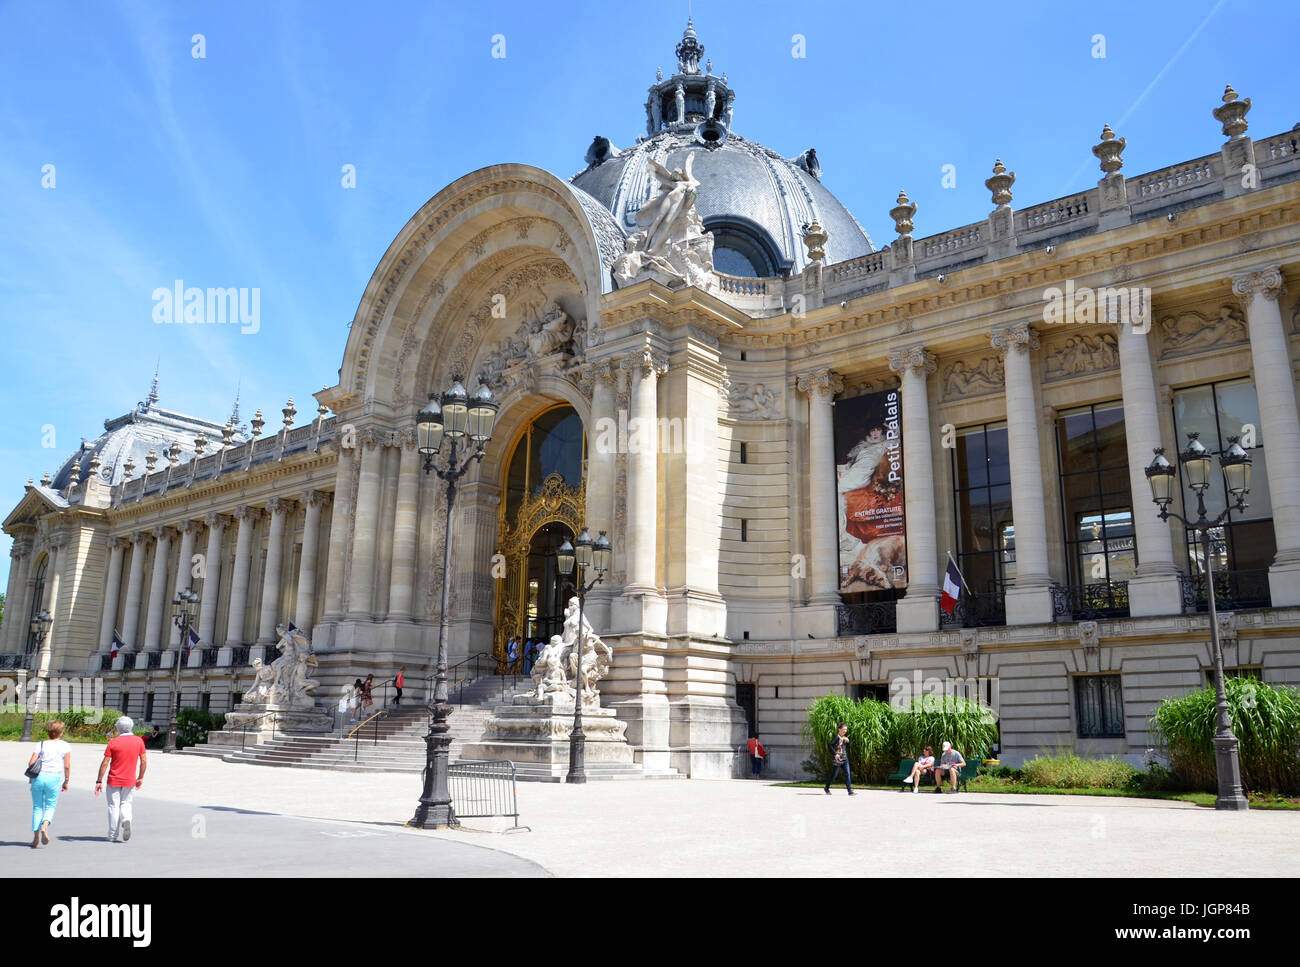 PARIS - AUG 13:  The Petit Palais in Paris, France is shown on August 13, 2016. The art museum was built for the 1900 World’s Fair. Stock Photo